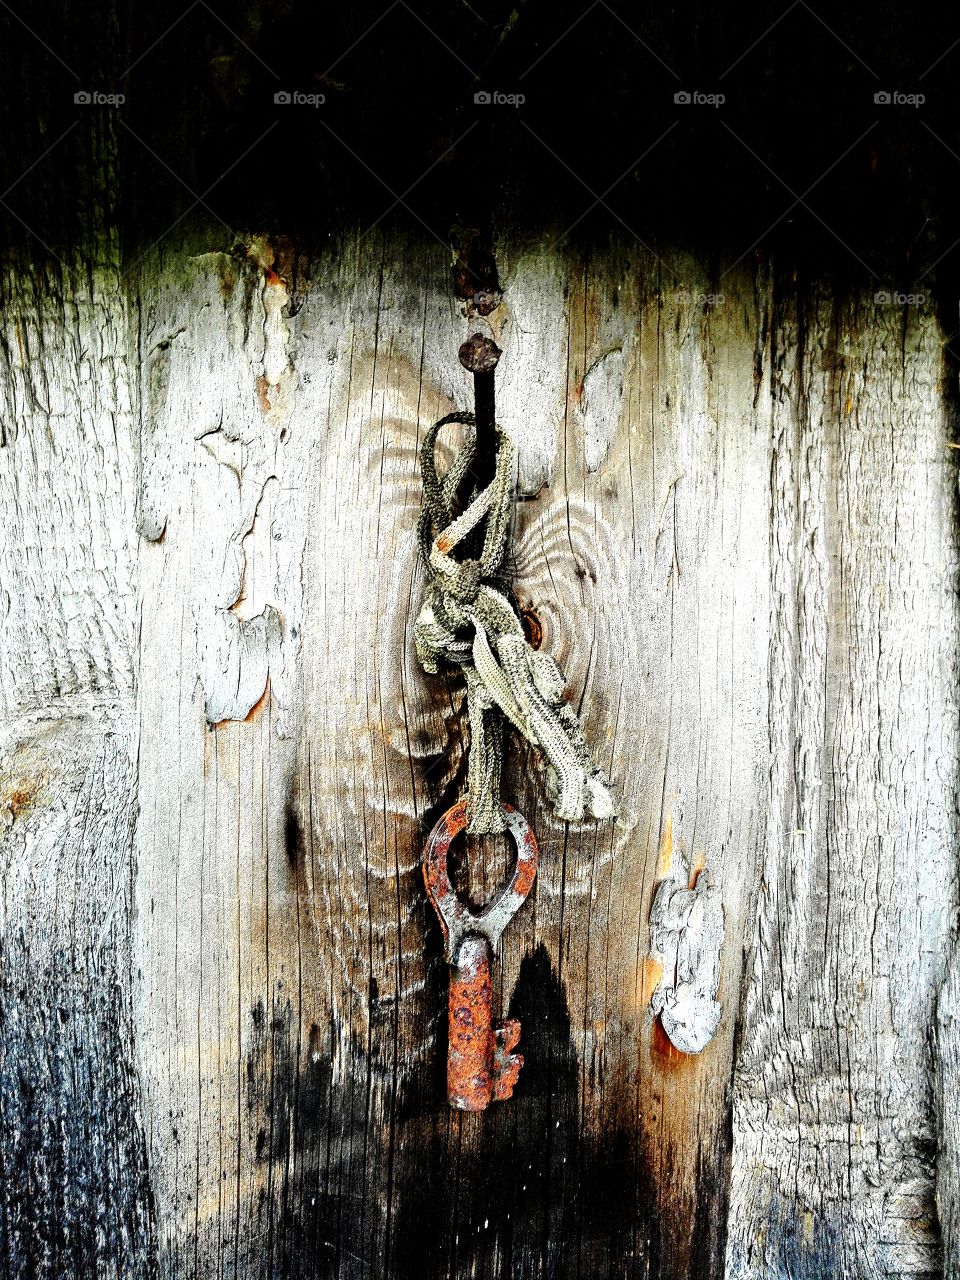 Forgotten rusty key.